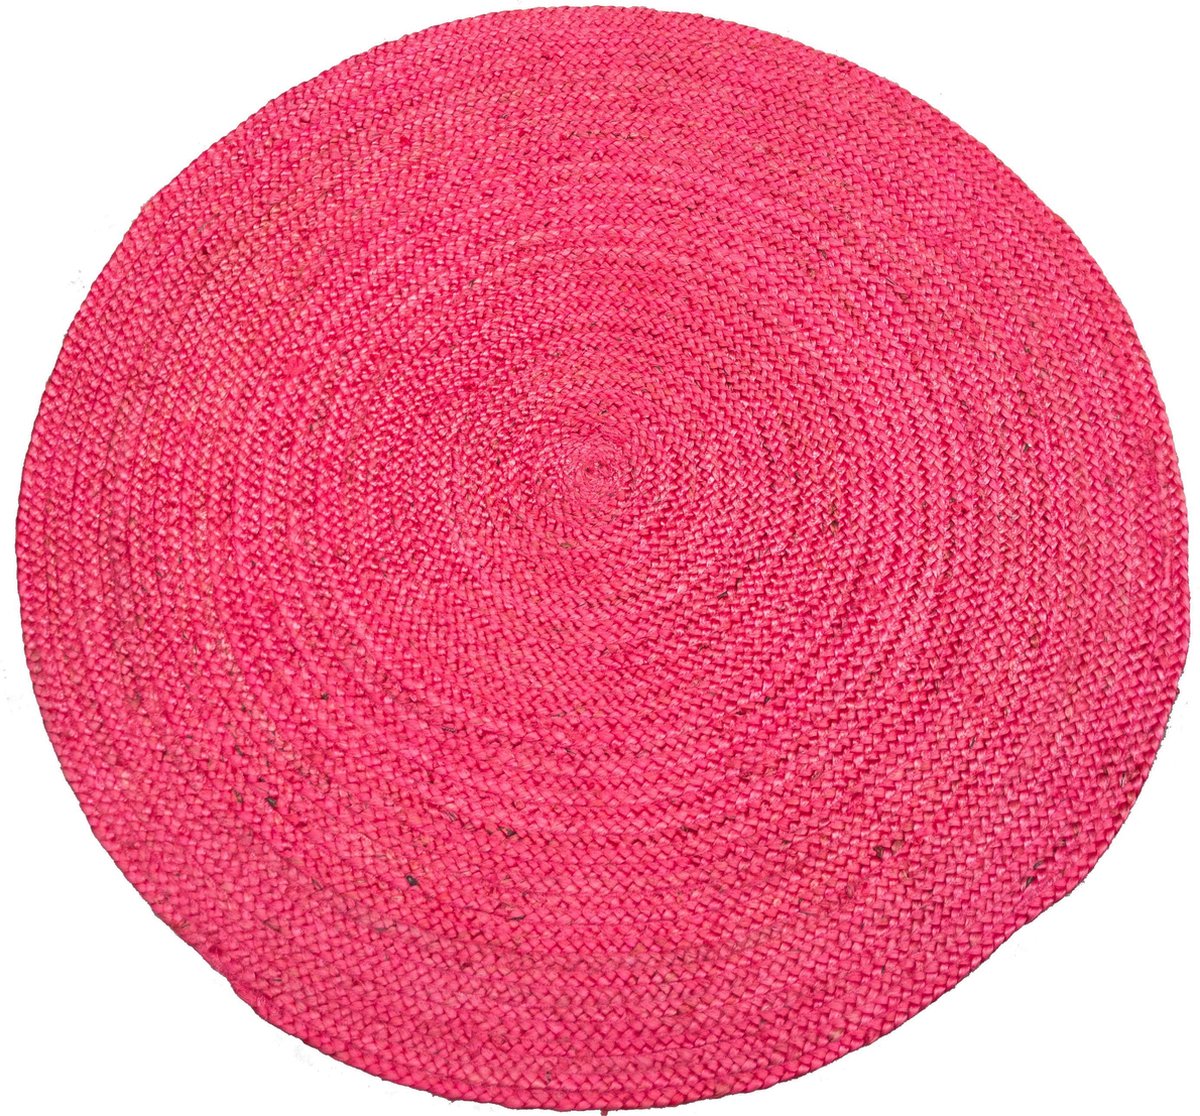 Rocaflor-vloerkleed-jute-rond-roze-fuchsia-ø120cm bol.com